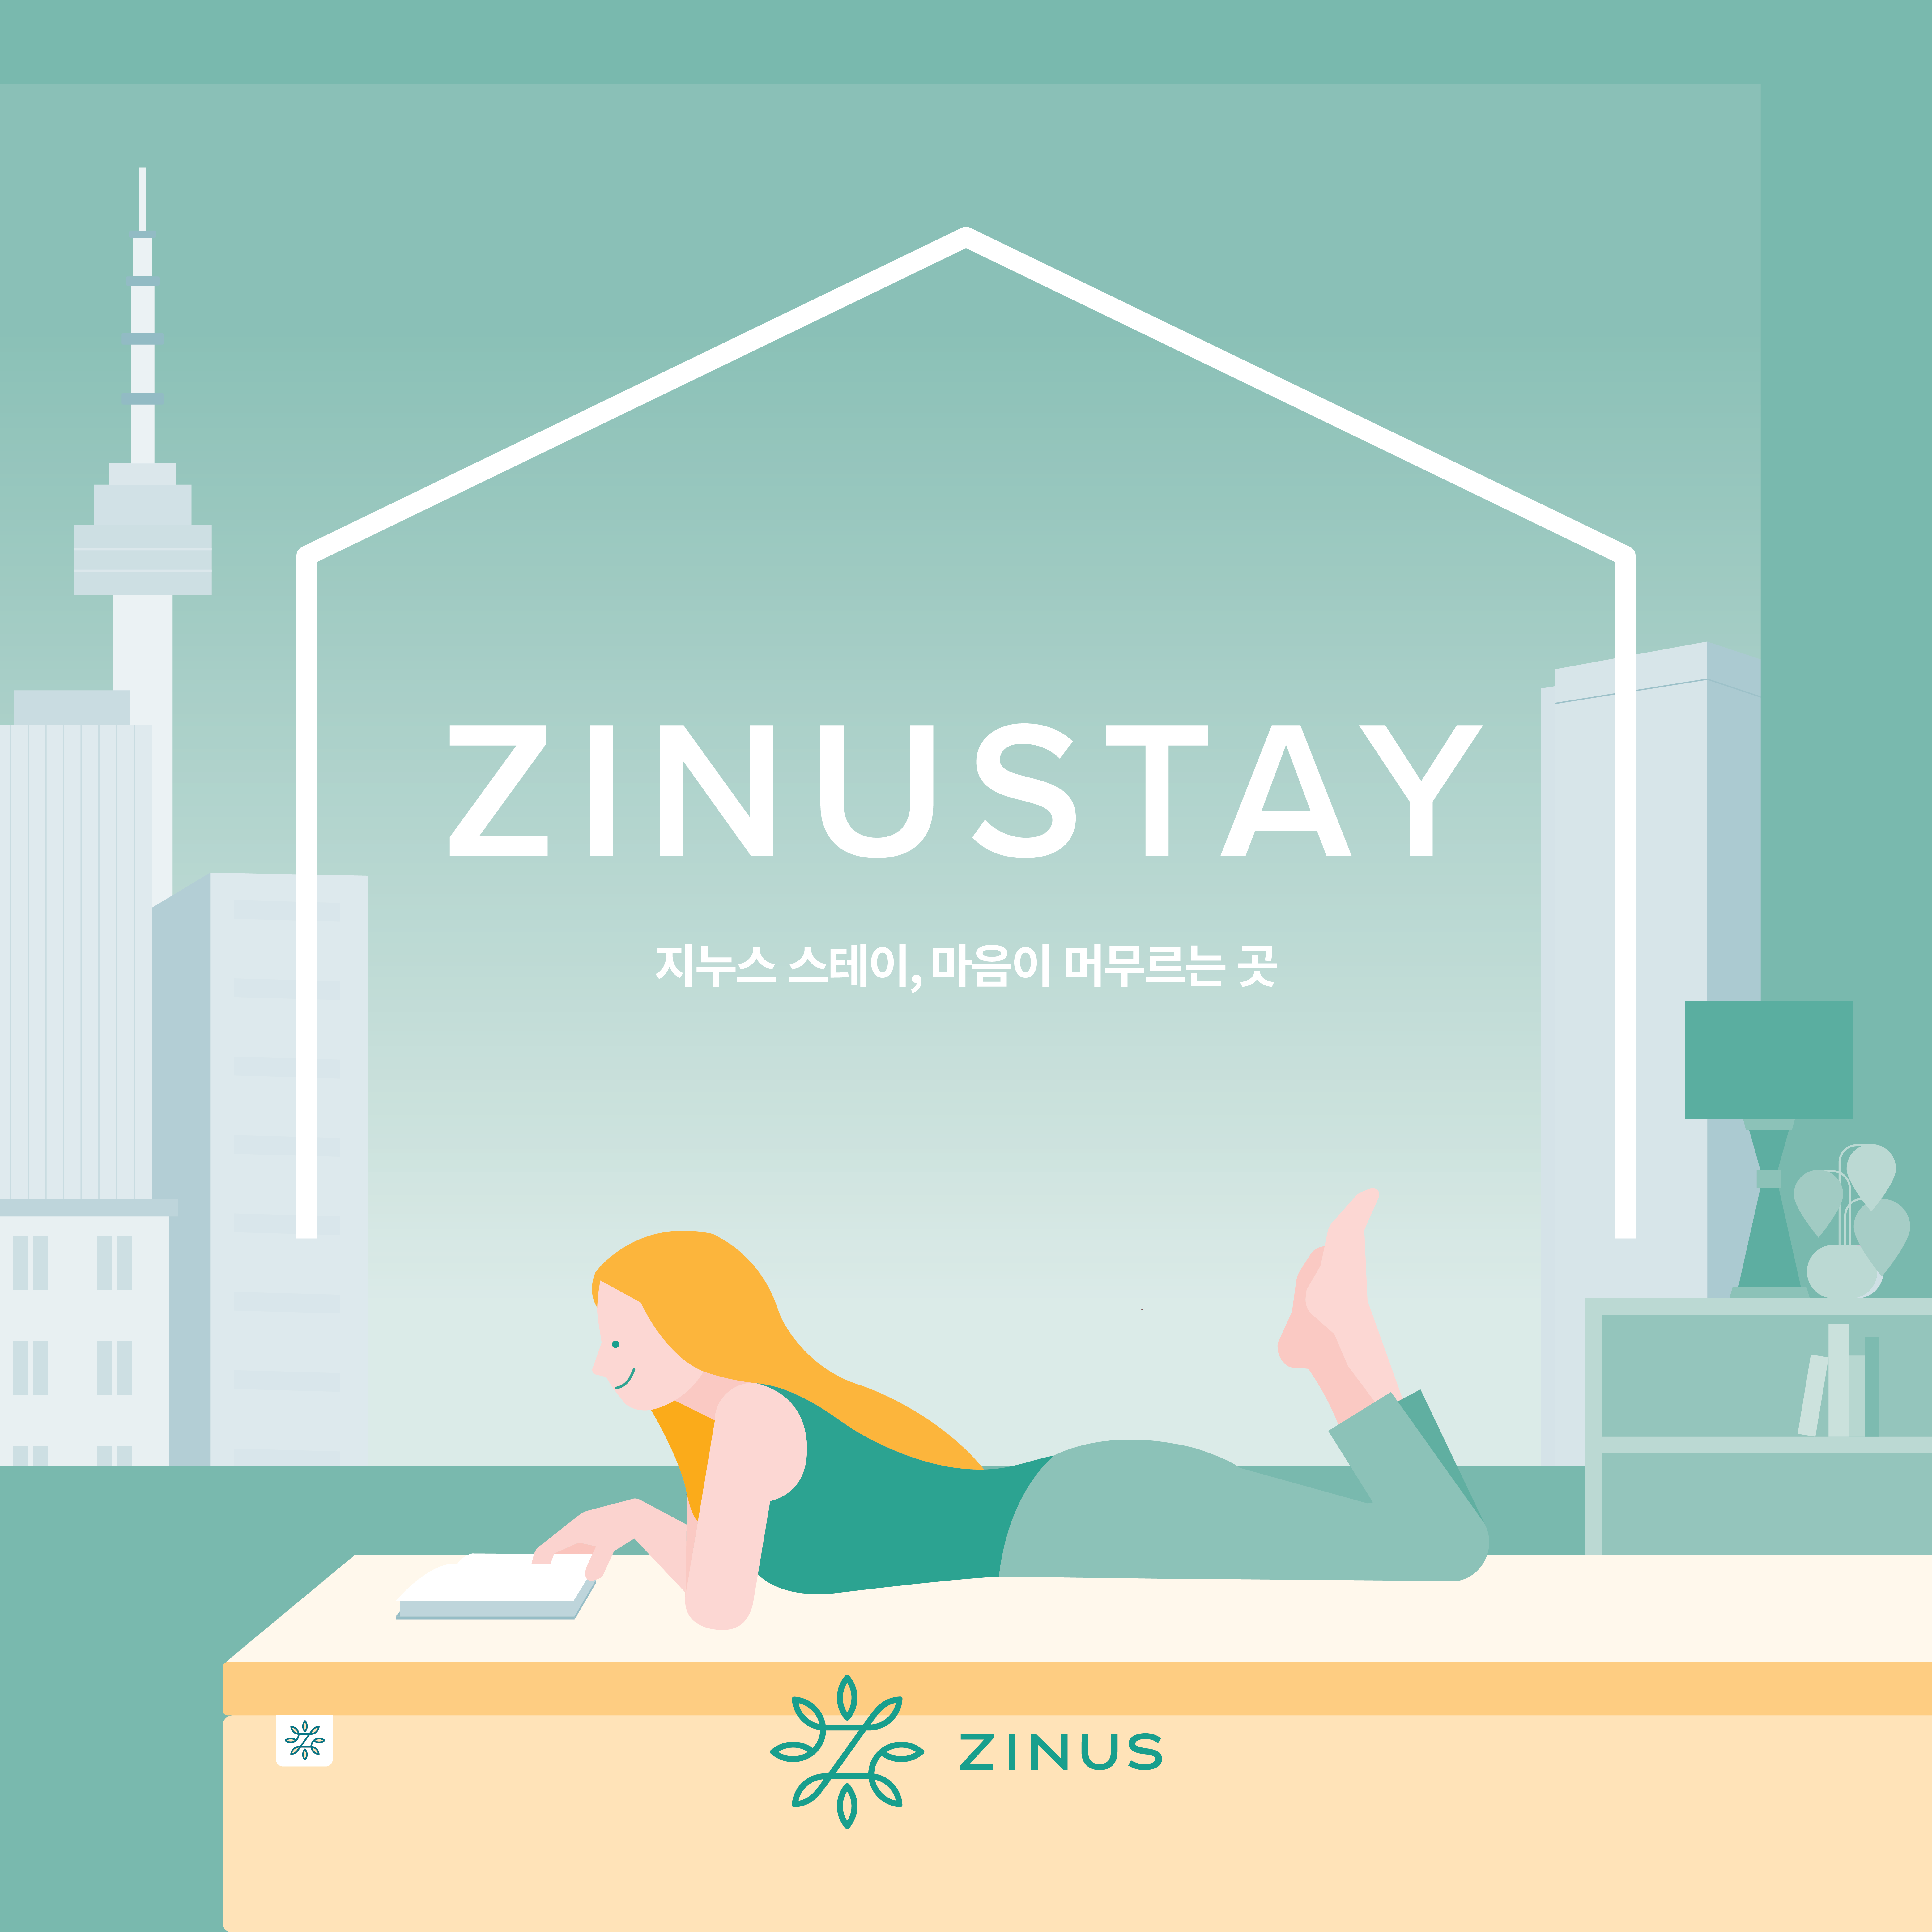 Zinustay_Illustration-01_112714.png